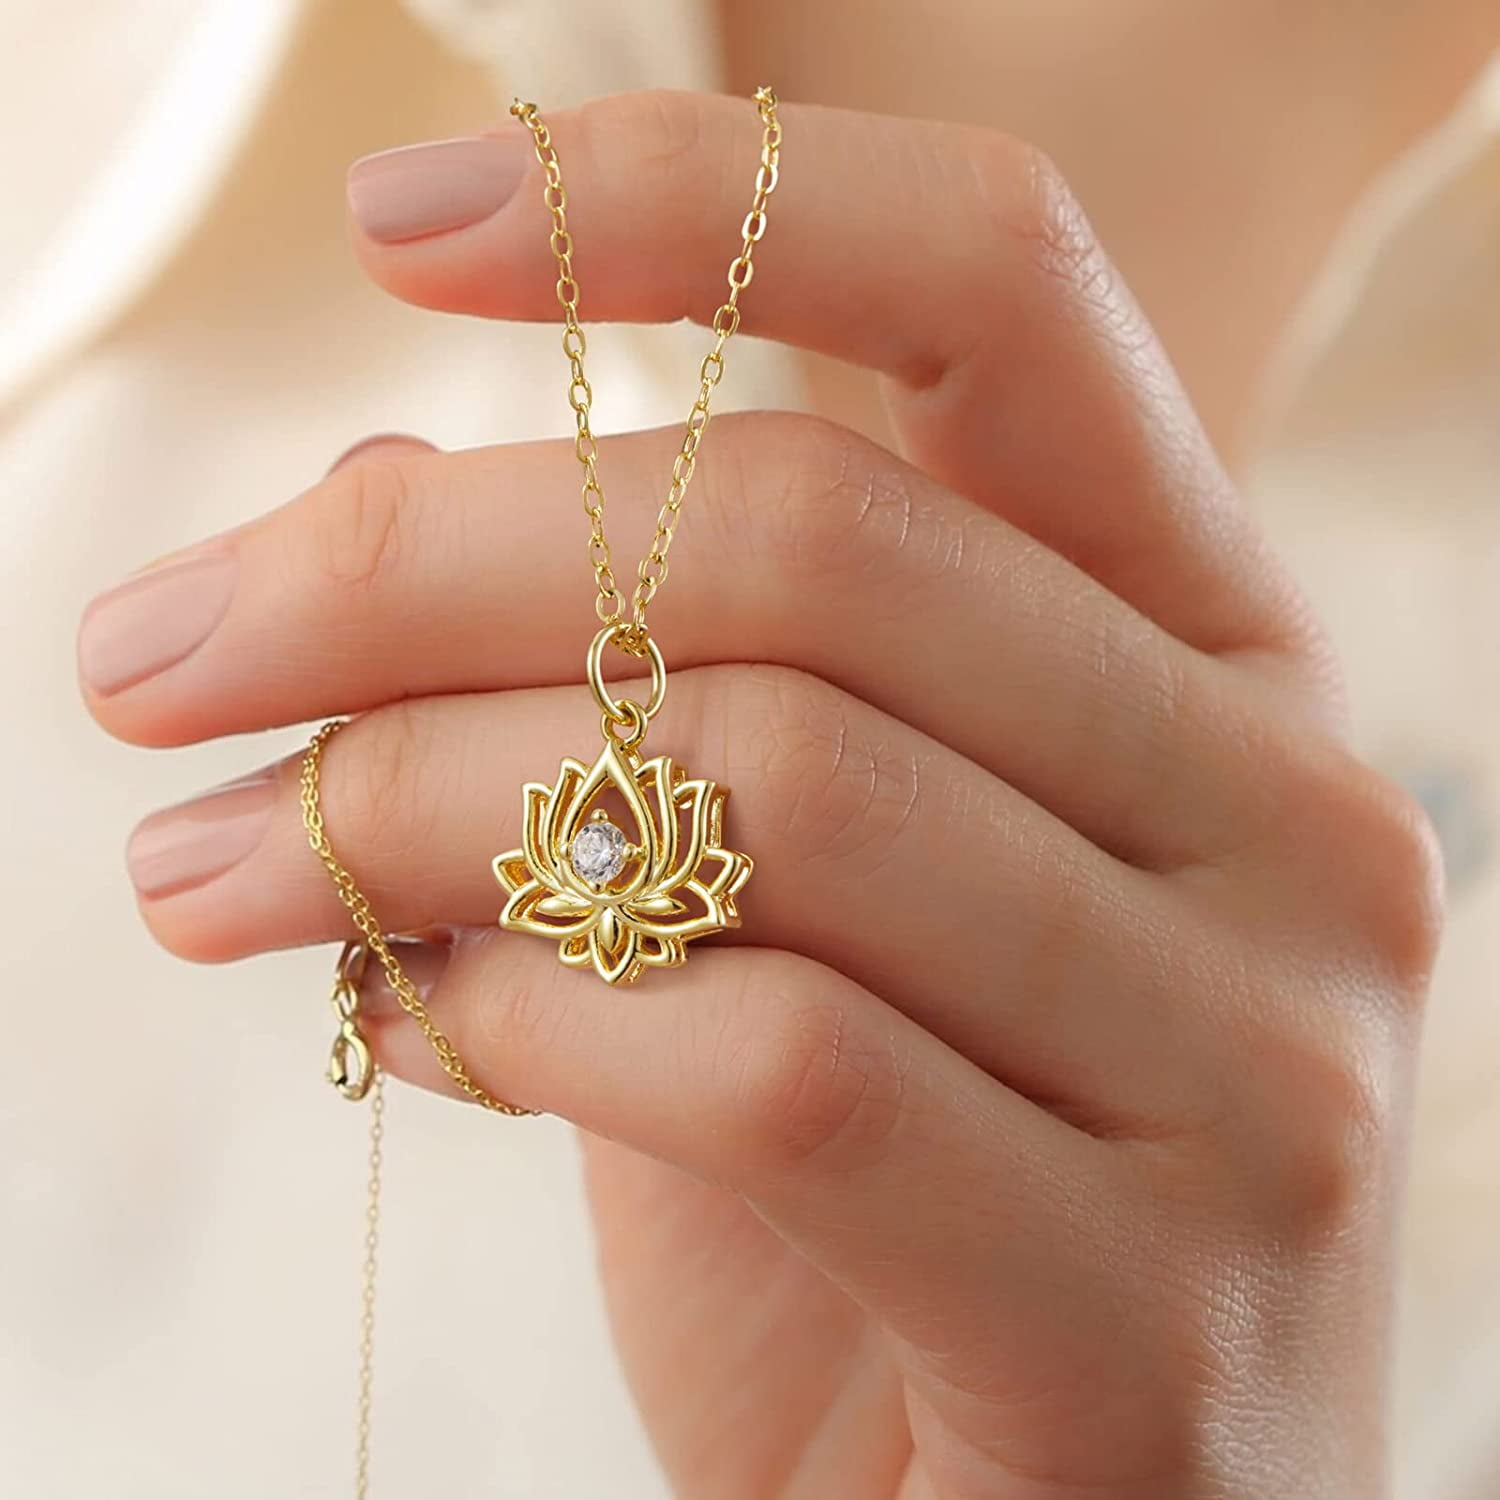 Lotus Necklace Gold Lotus Flower Necklace Yoga Necklace 